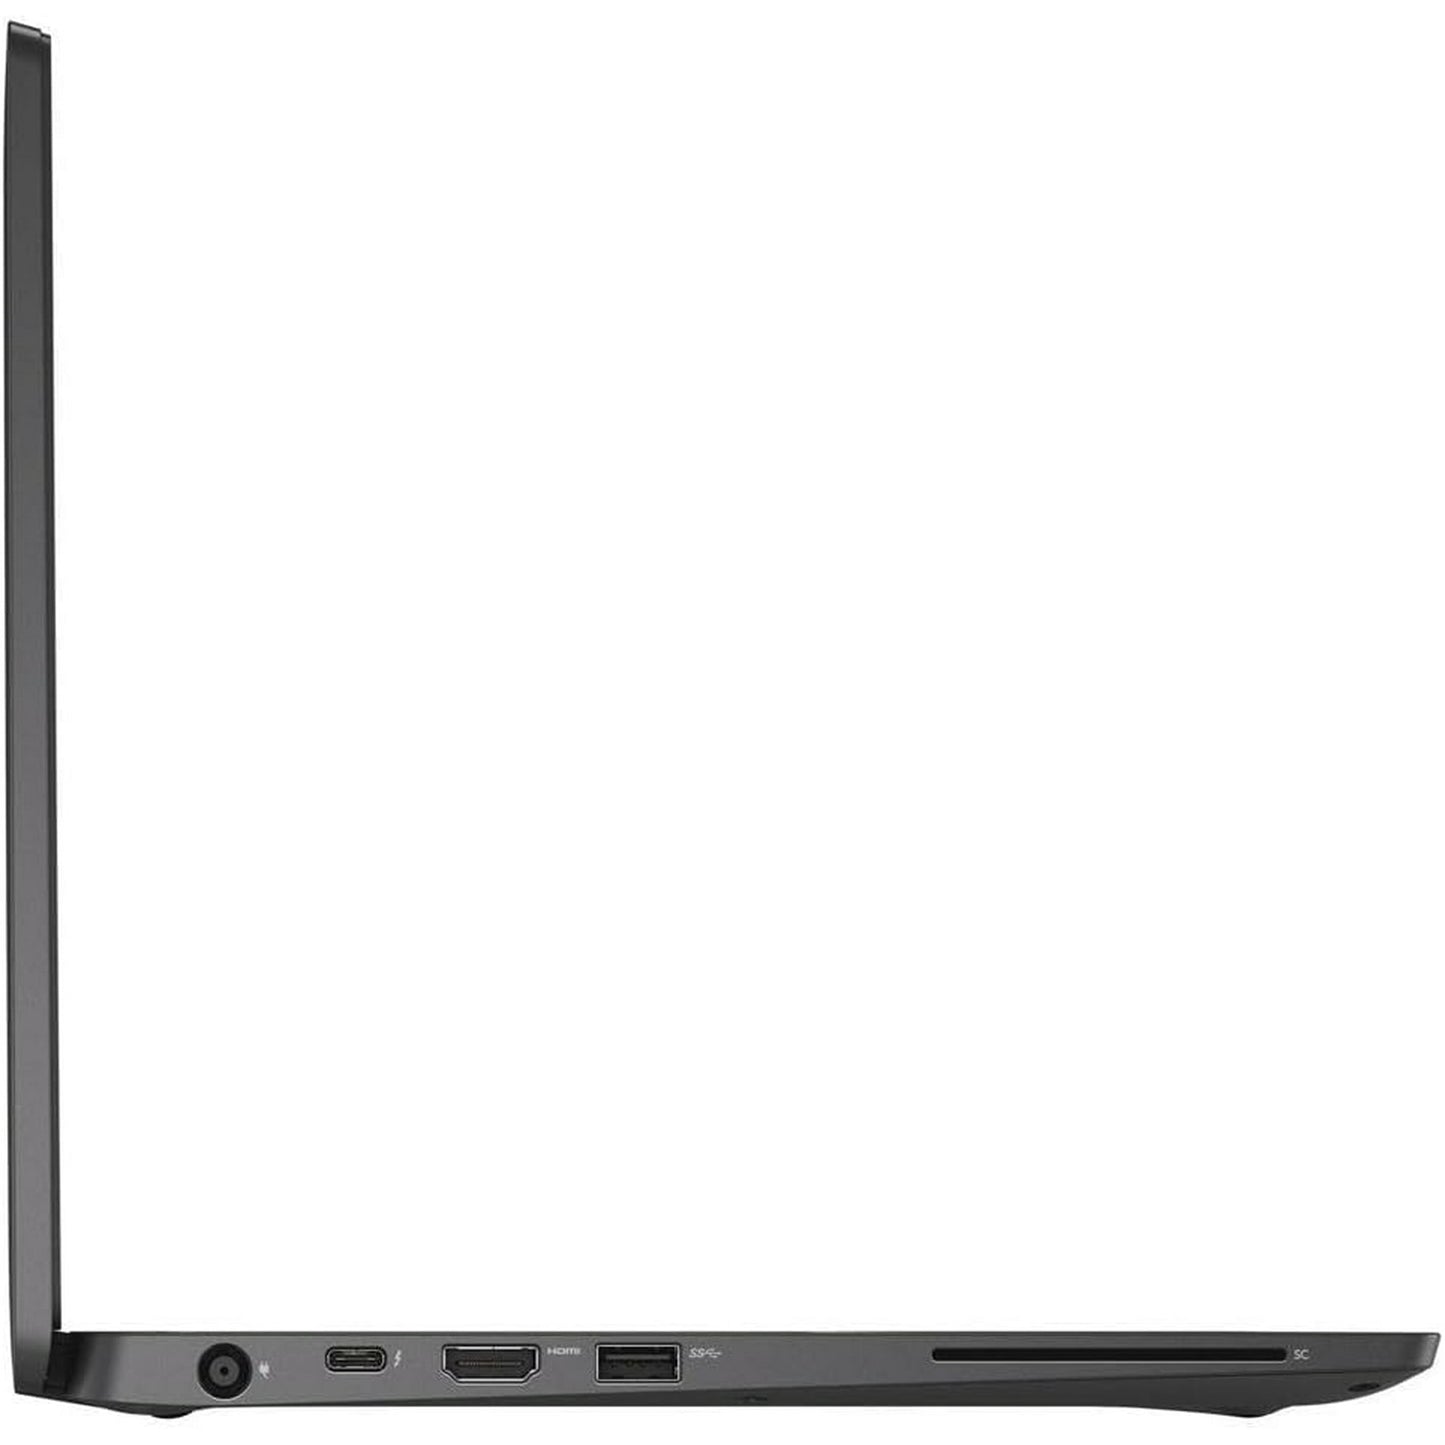 Dell Latitude 7400 14" FHD Laptop - Intel Core i5 8th Gen | 16GB RAM | 256GB SSD - (Refurbished)